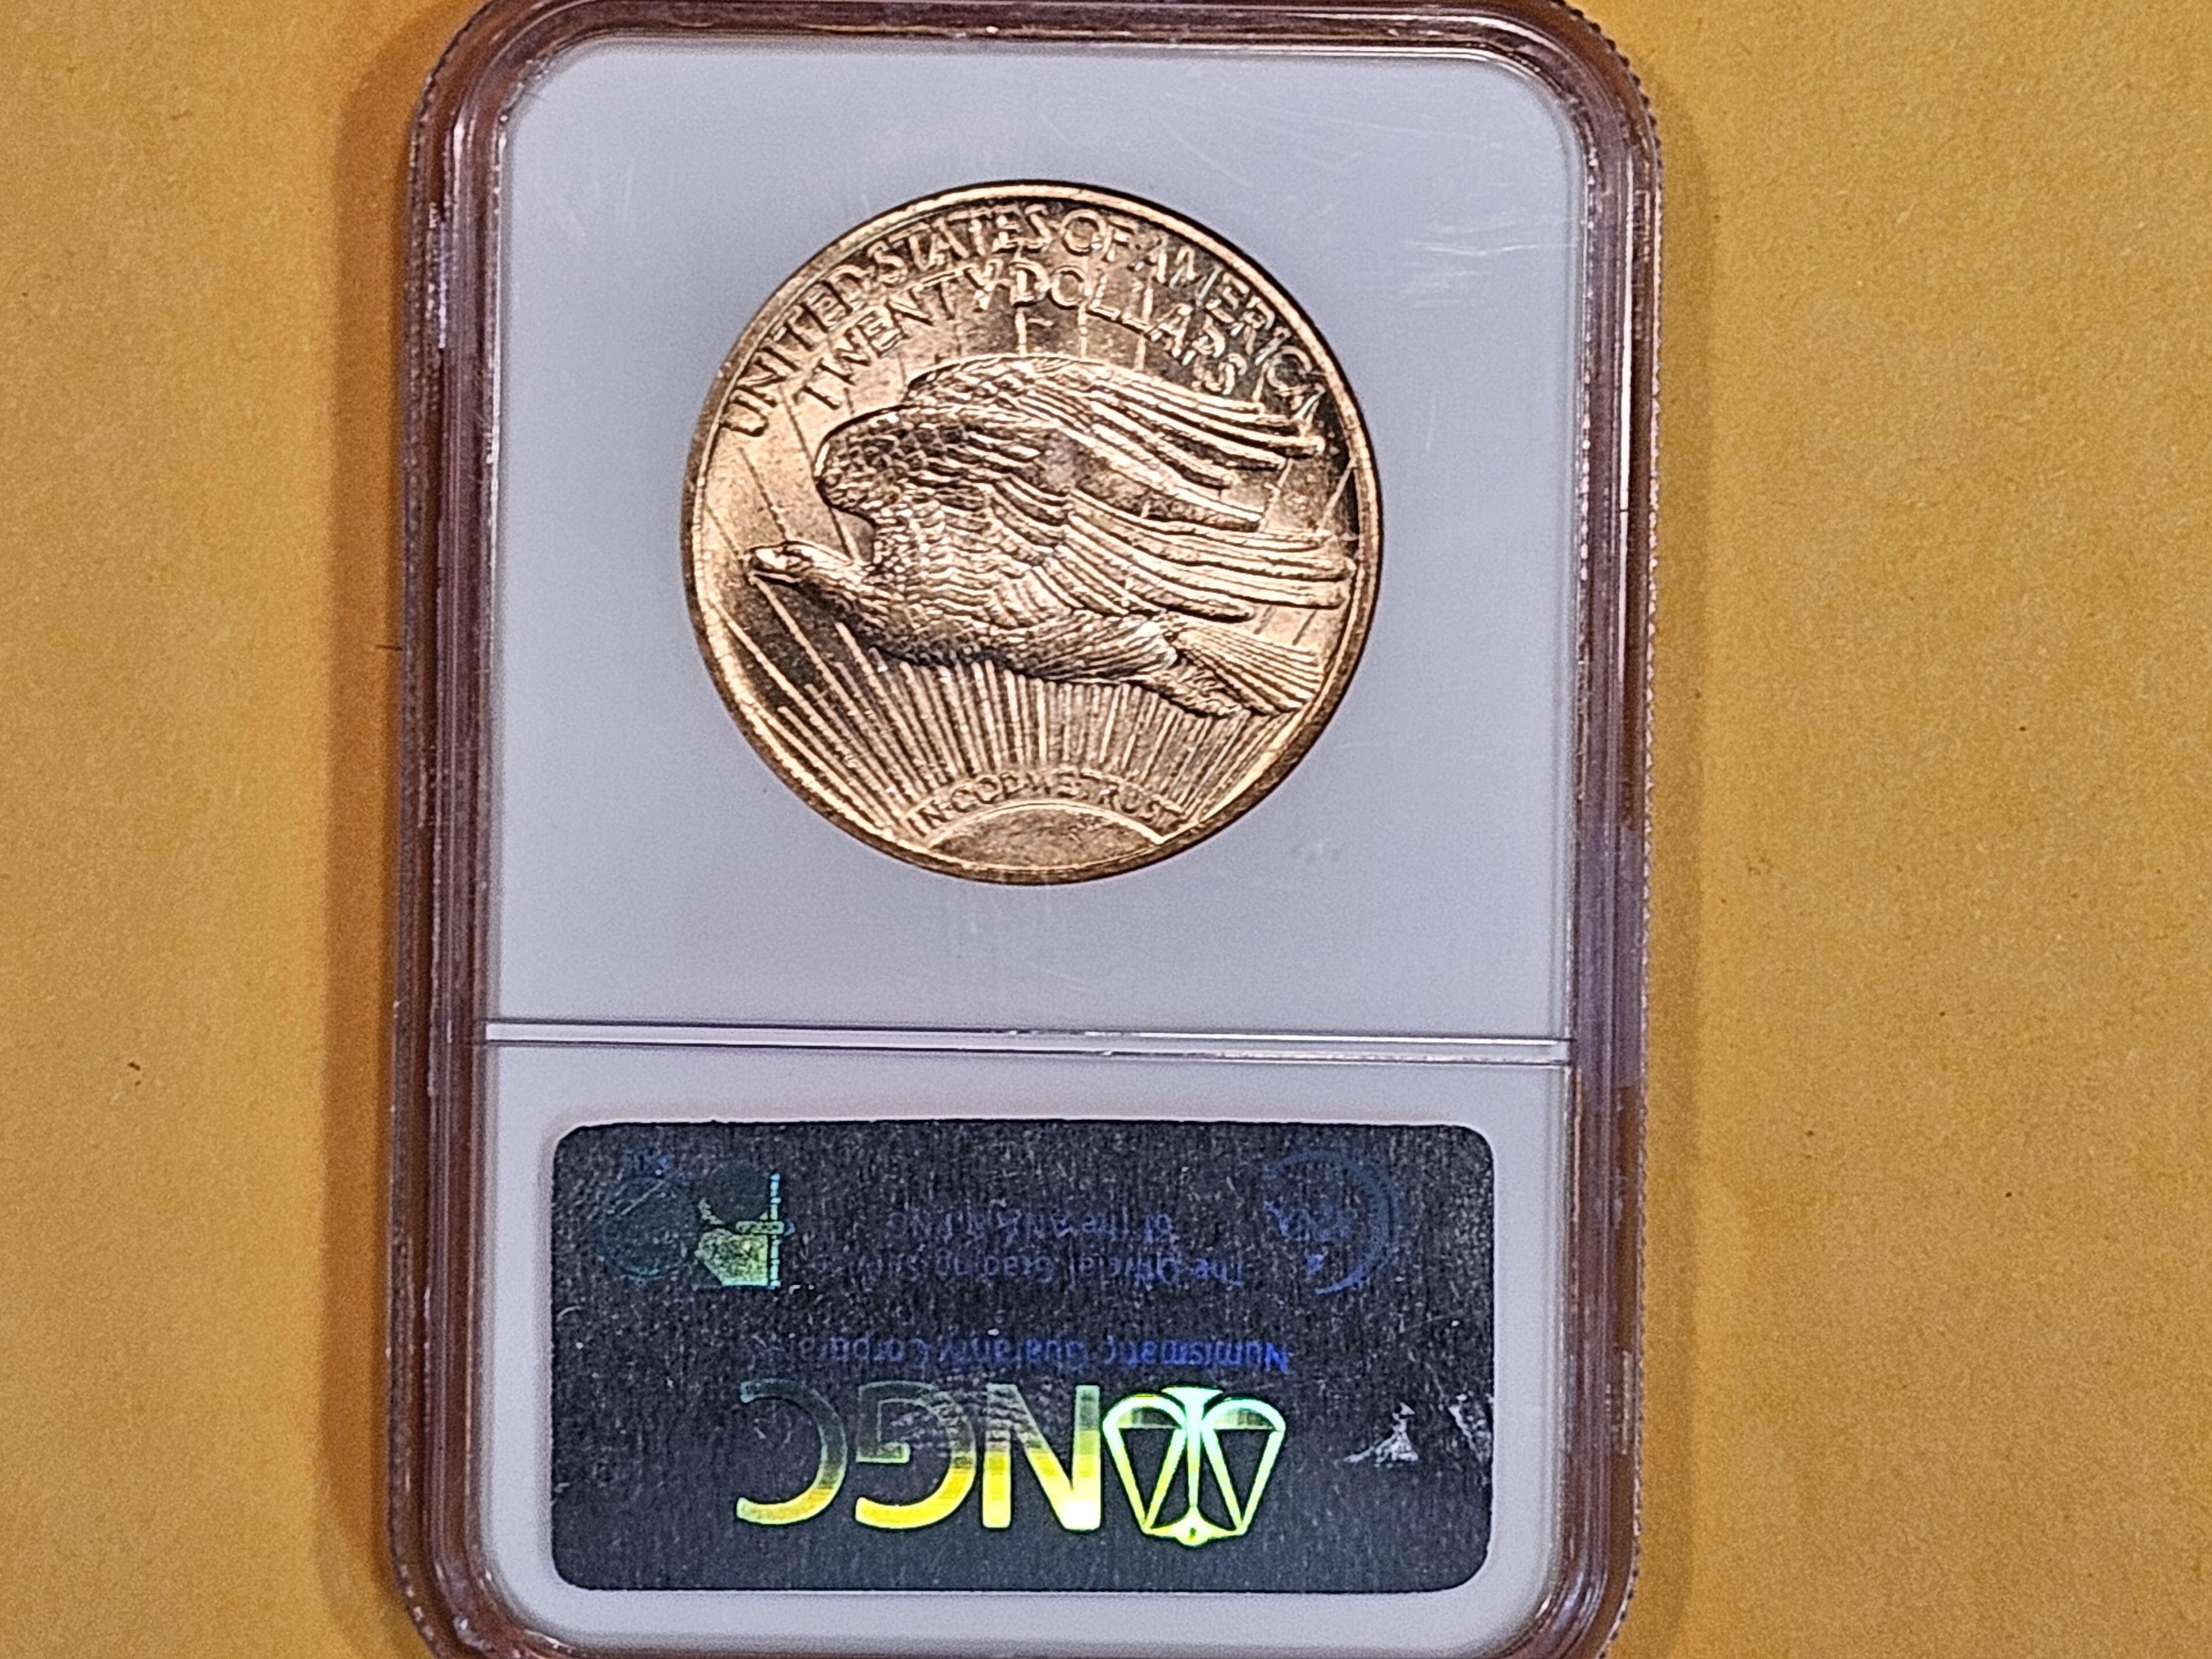 GOLD! NGC 1922 Saint Gaudens Gold Twenty Dollar in Mint State 63